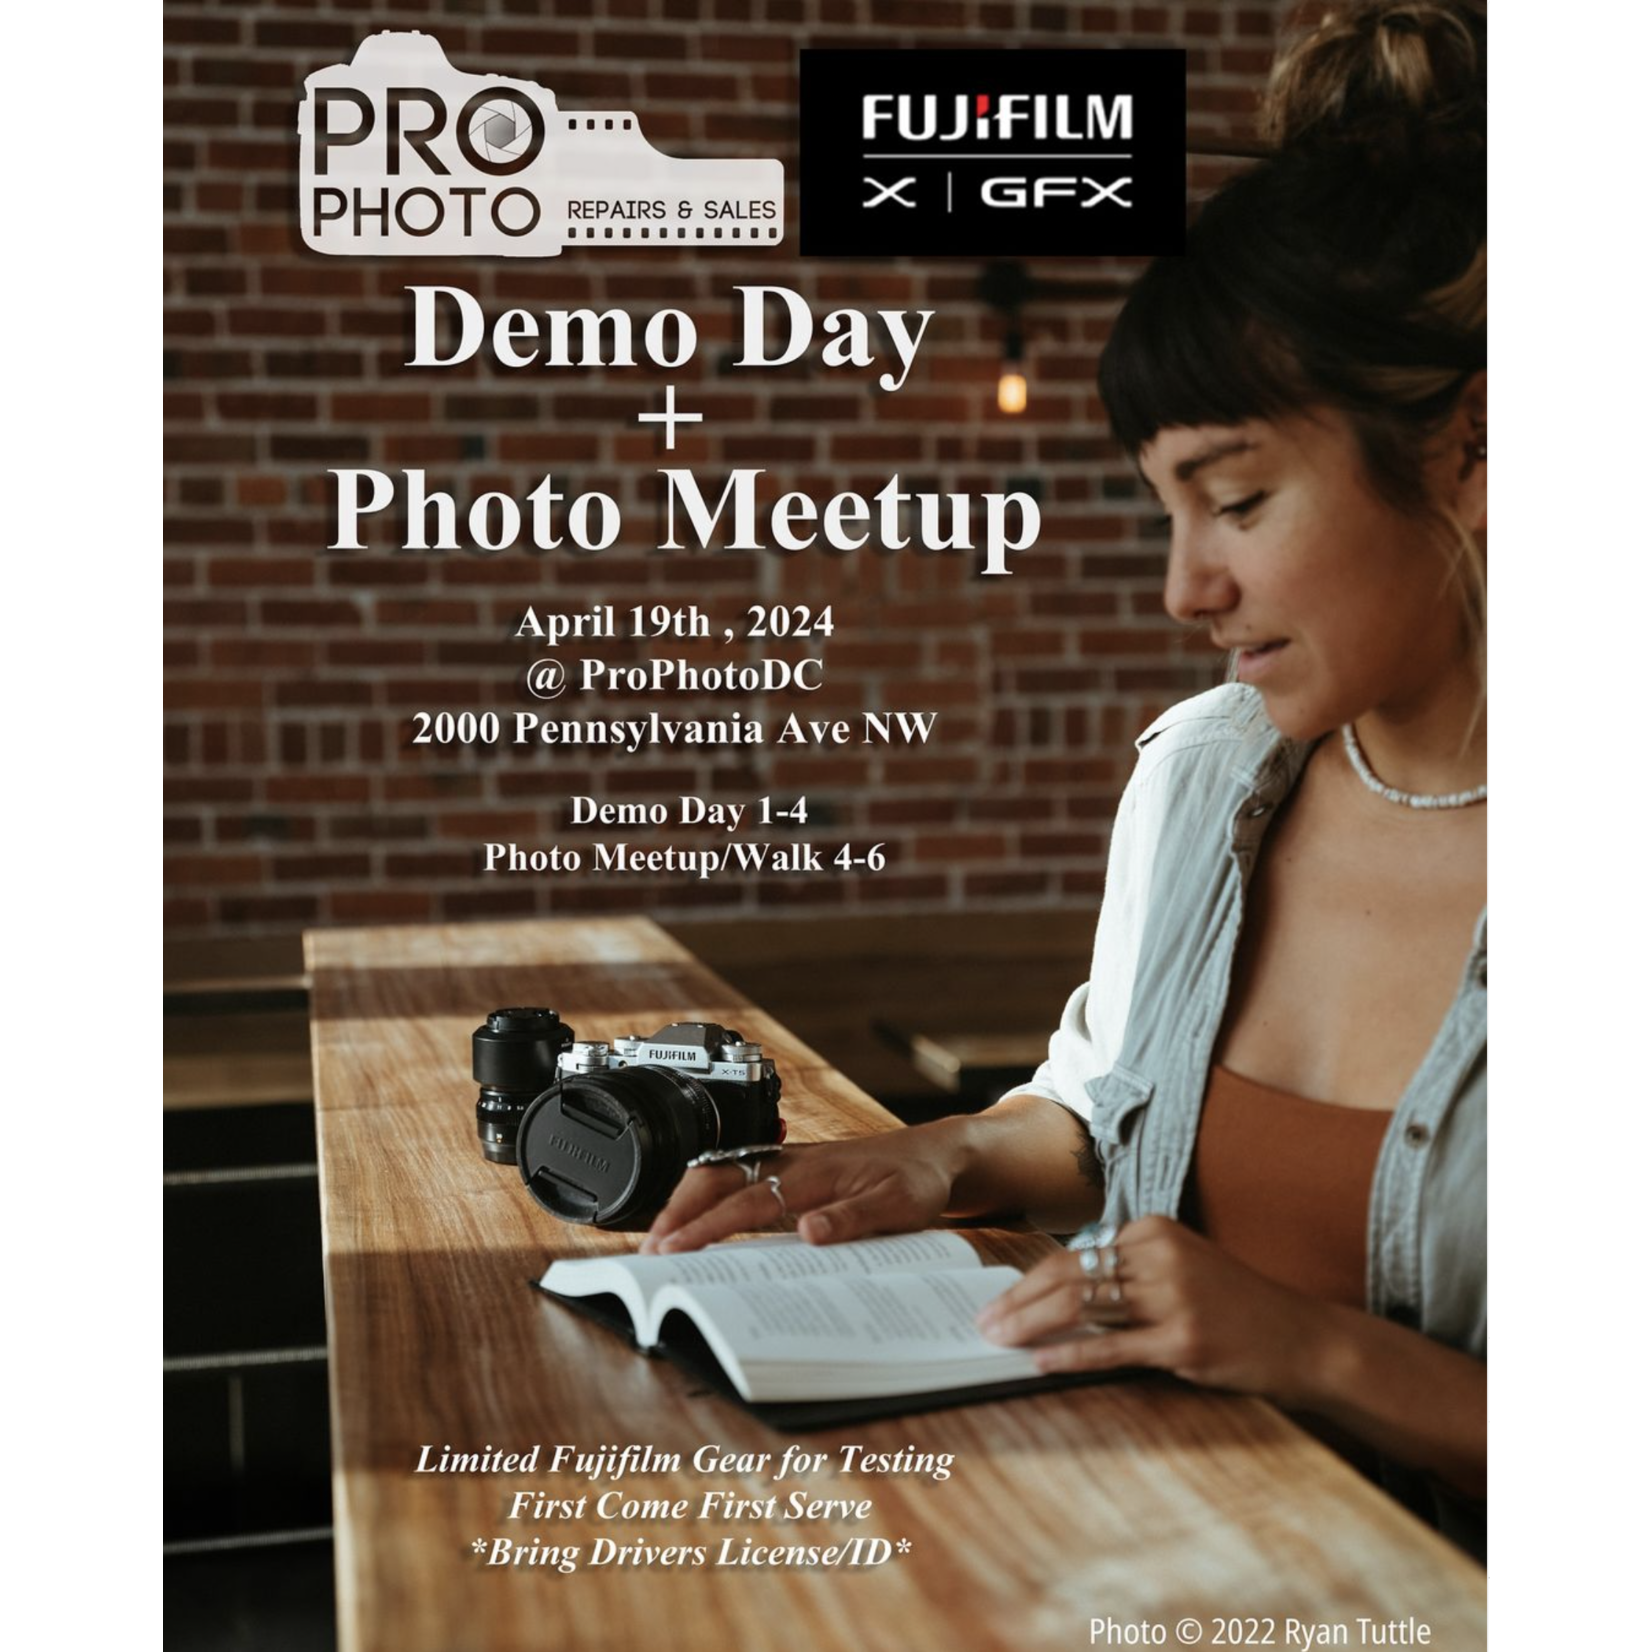 Fujifilm Fujifilm Photo Meetup on 4/19/24 from 4pm-6pm